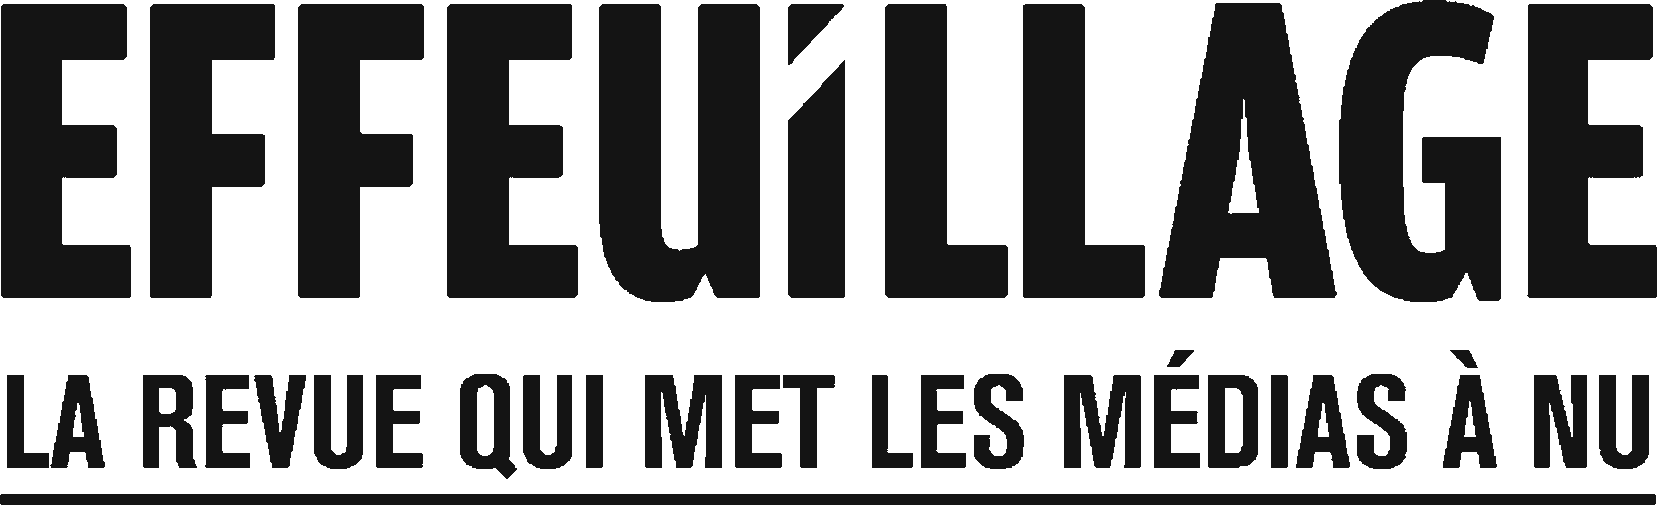 Effeuillag logo